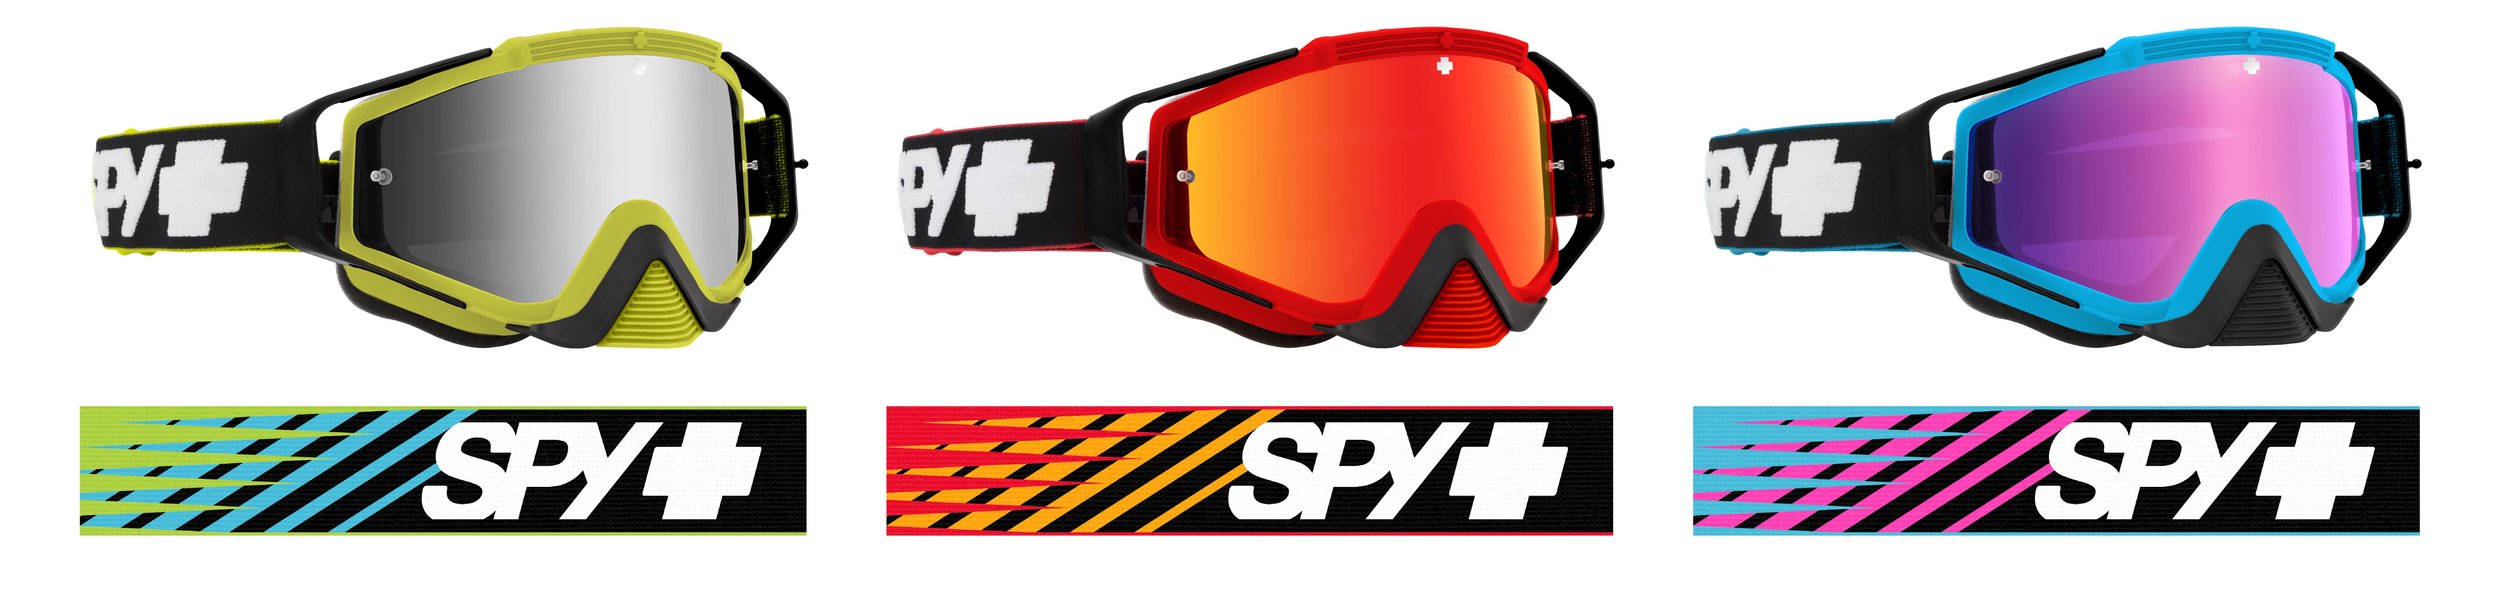 22-Website-Spy-Mx-Goggles-Slash-Series.jpg